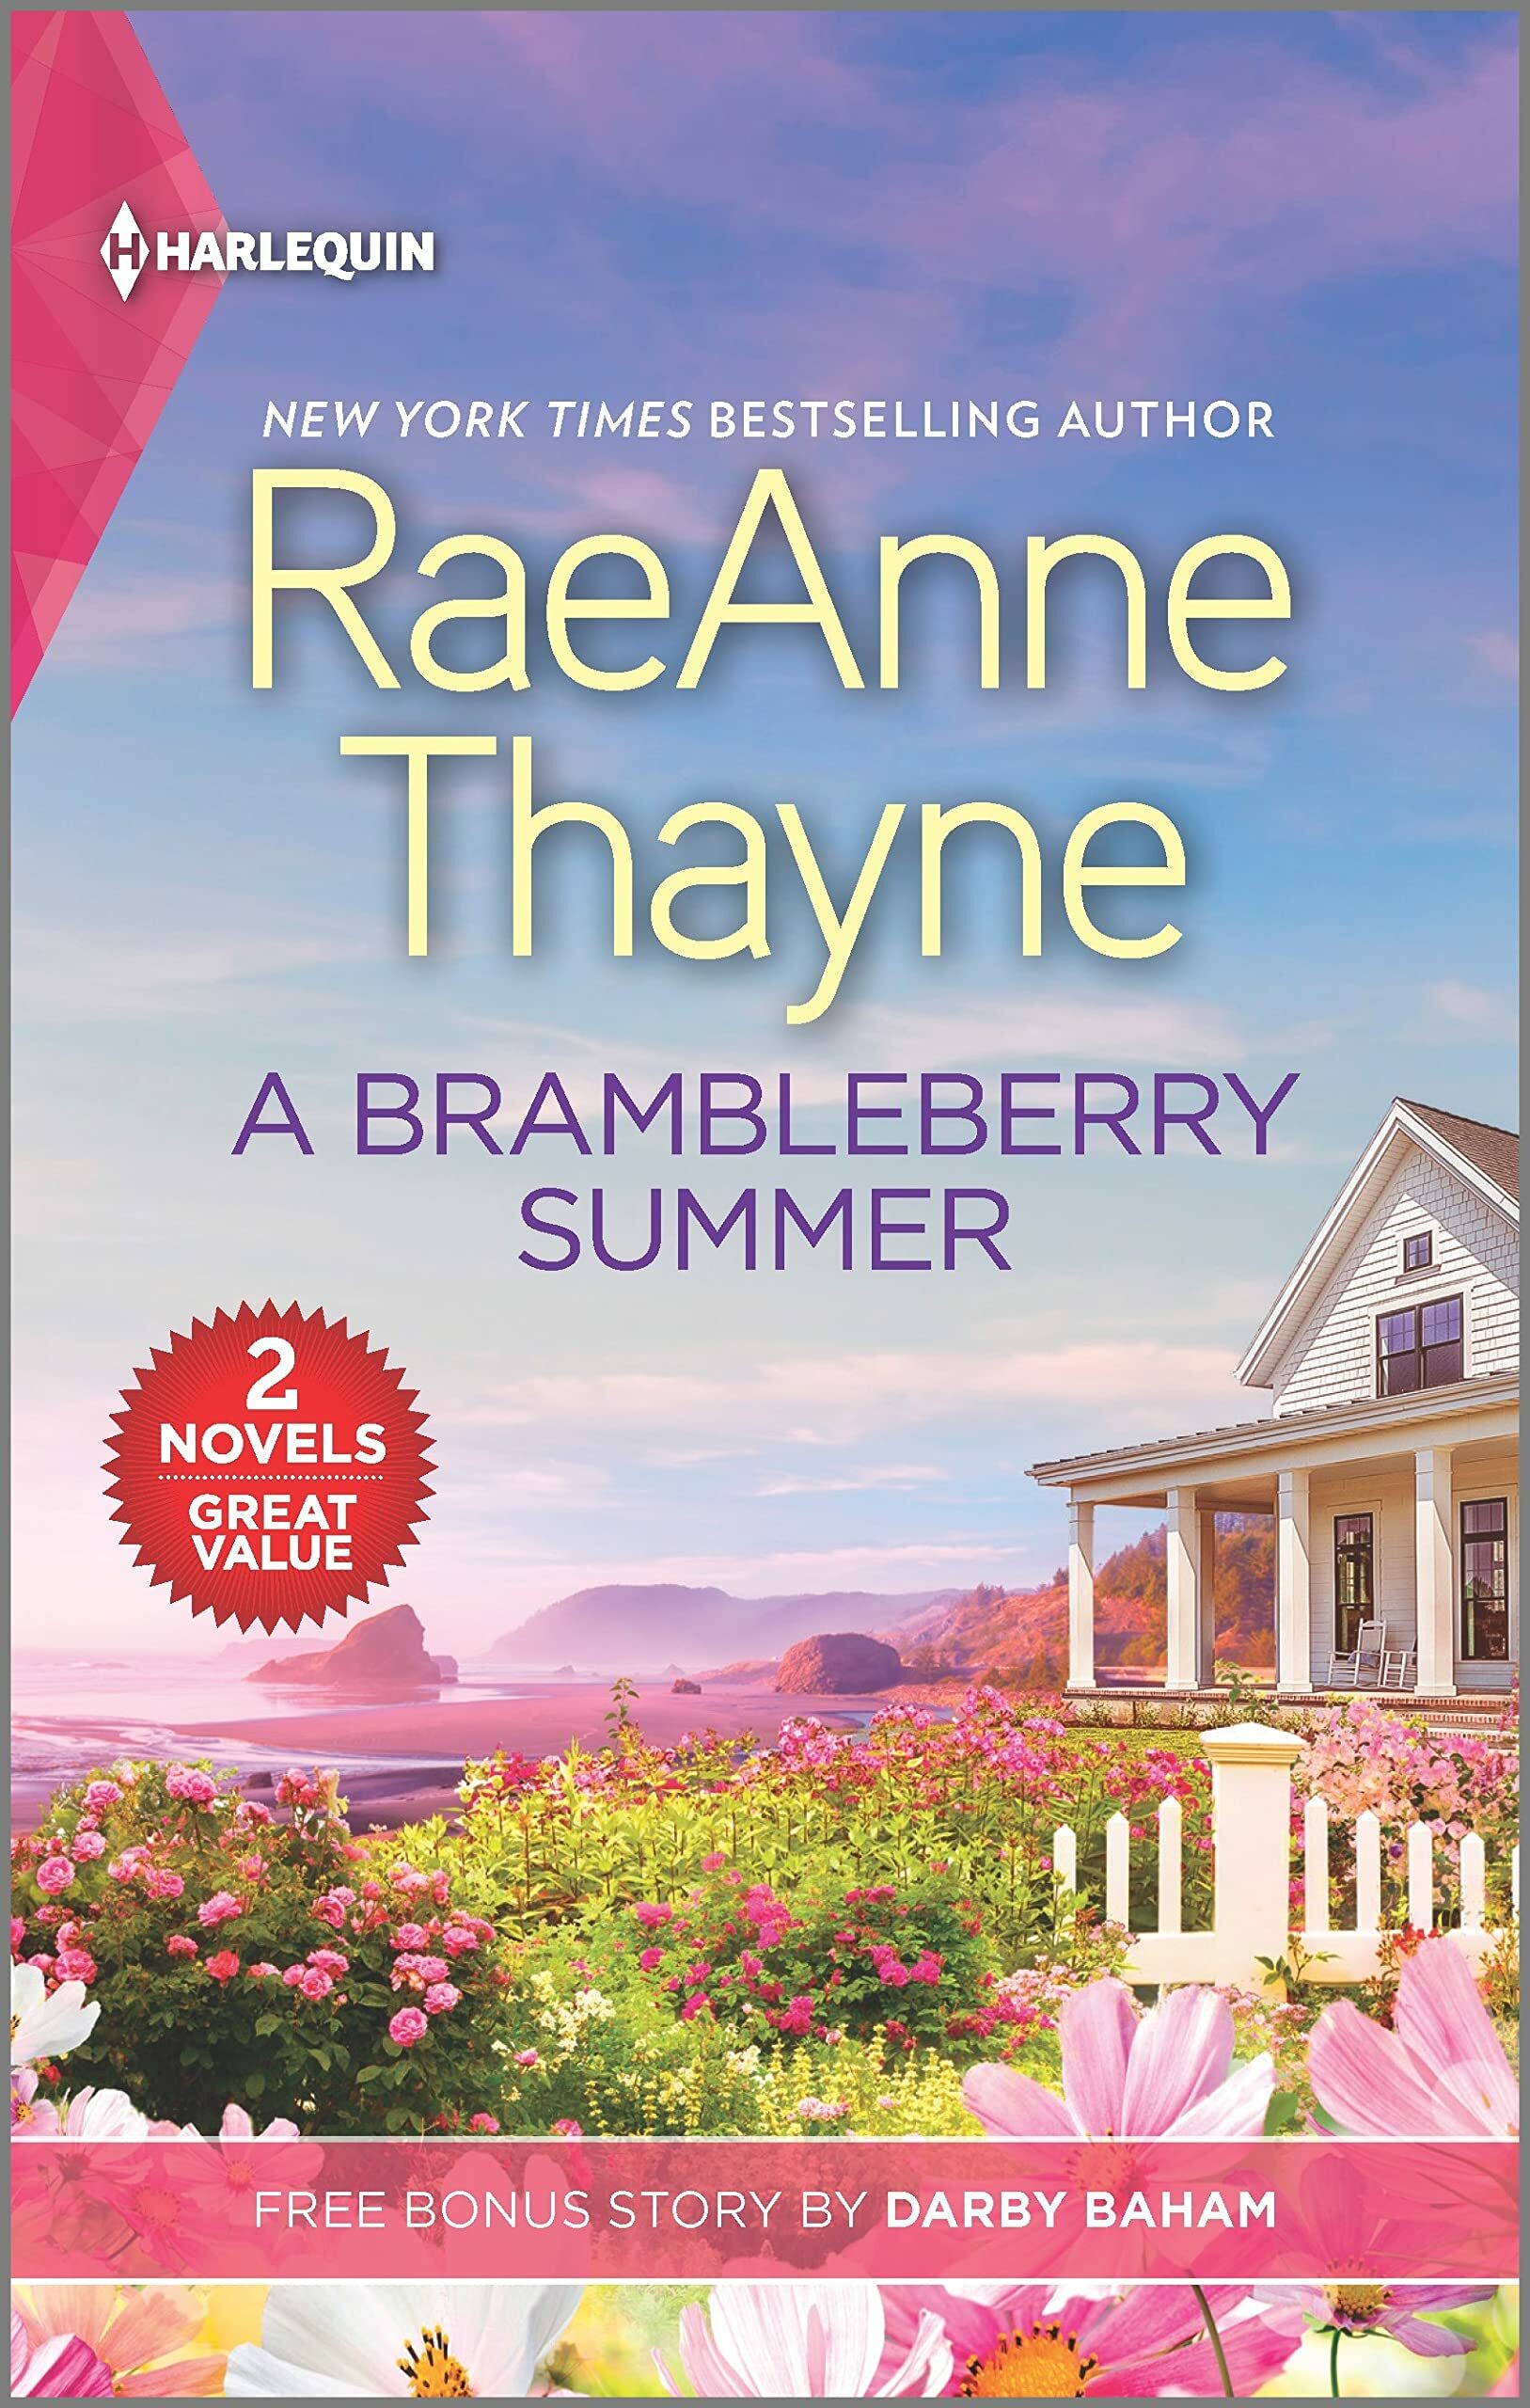 A Brambleberry Summer / The Shoe Diaries